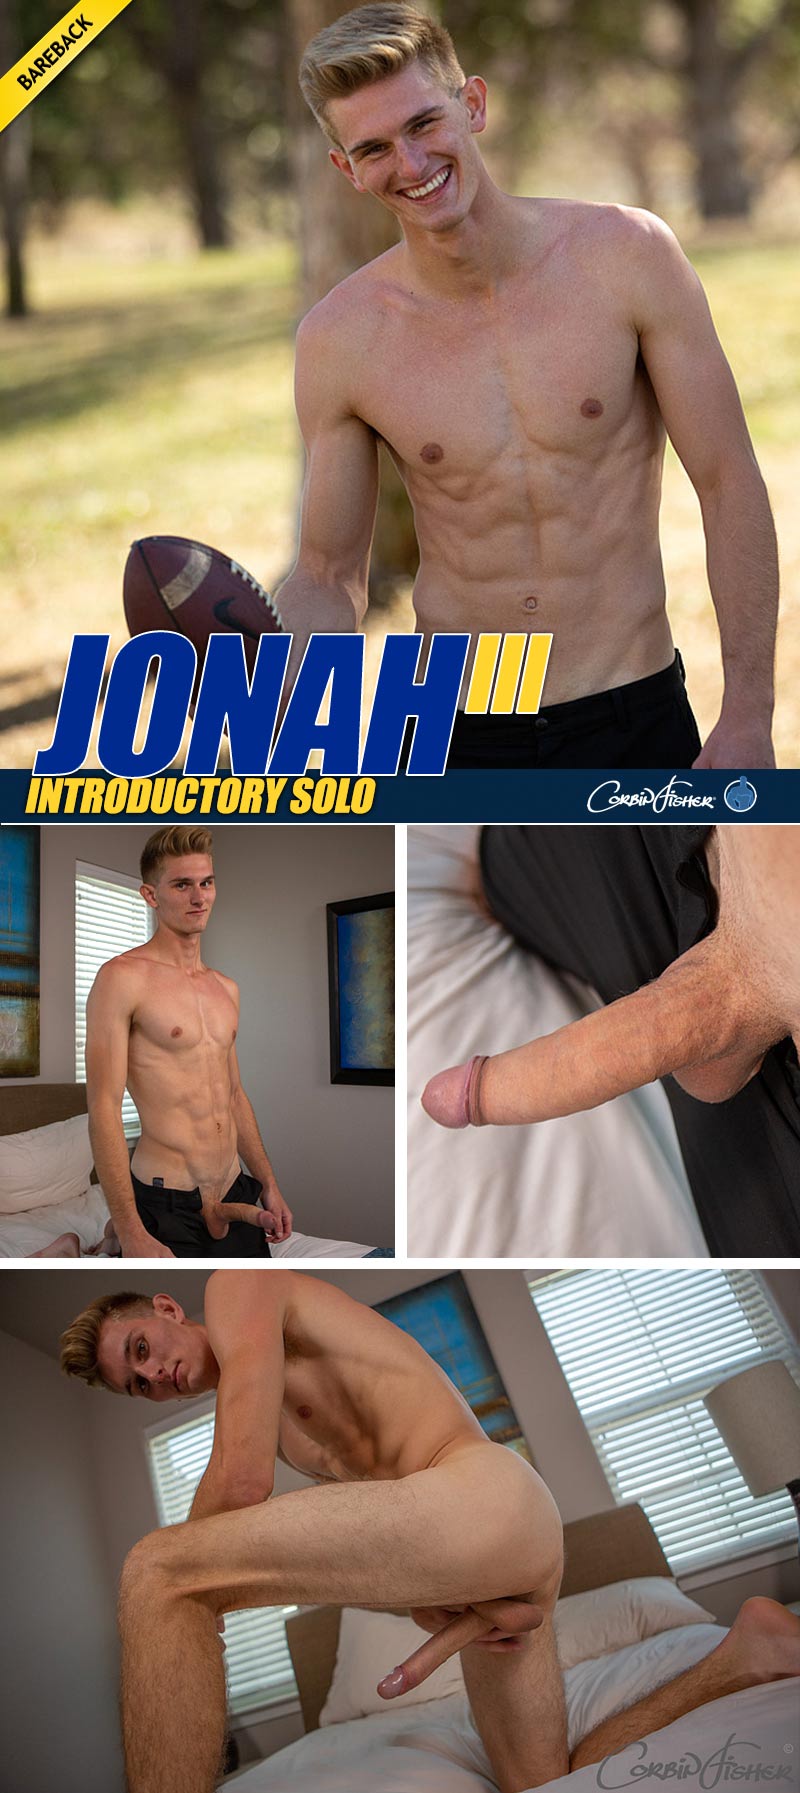 Jonah (III) at CorbinFisher